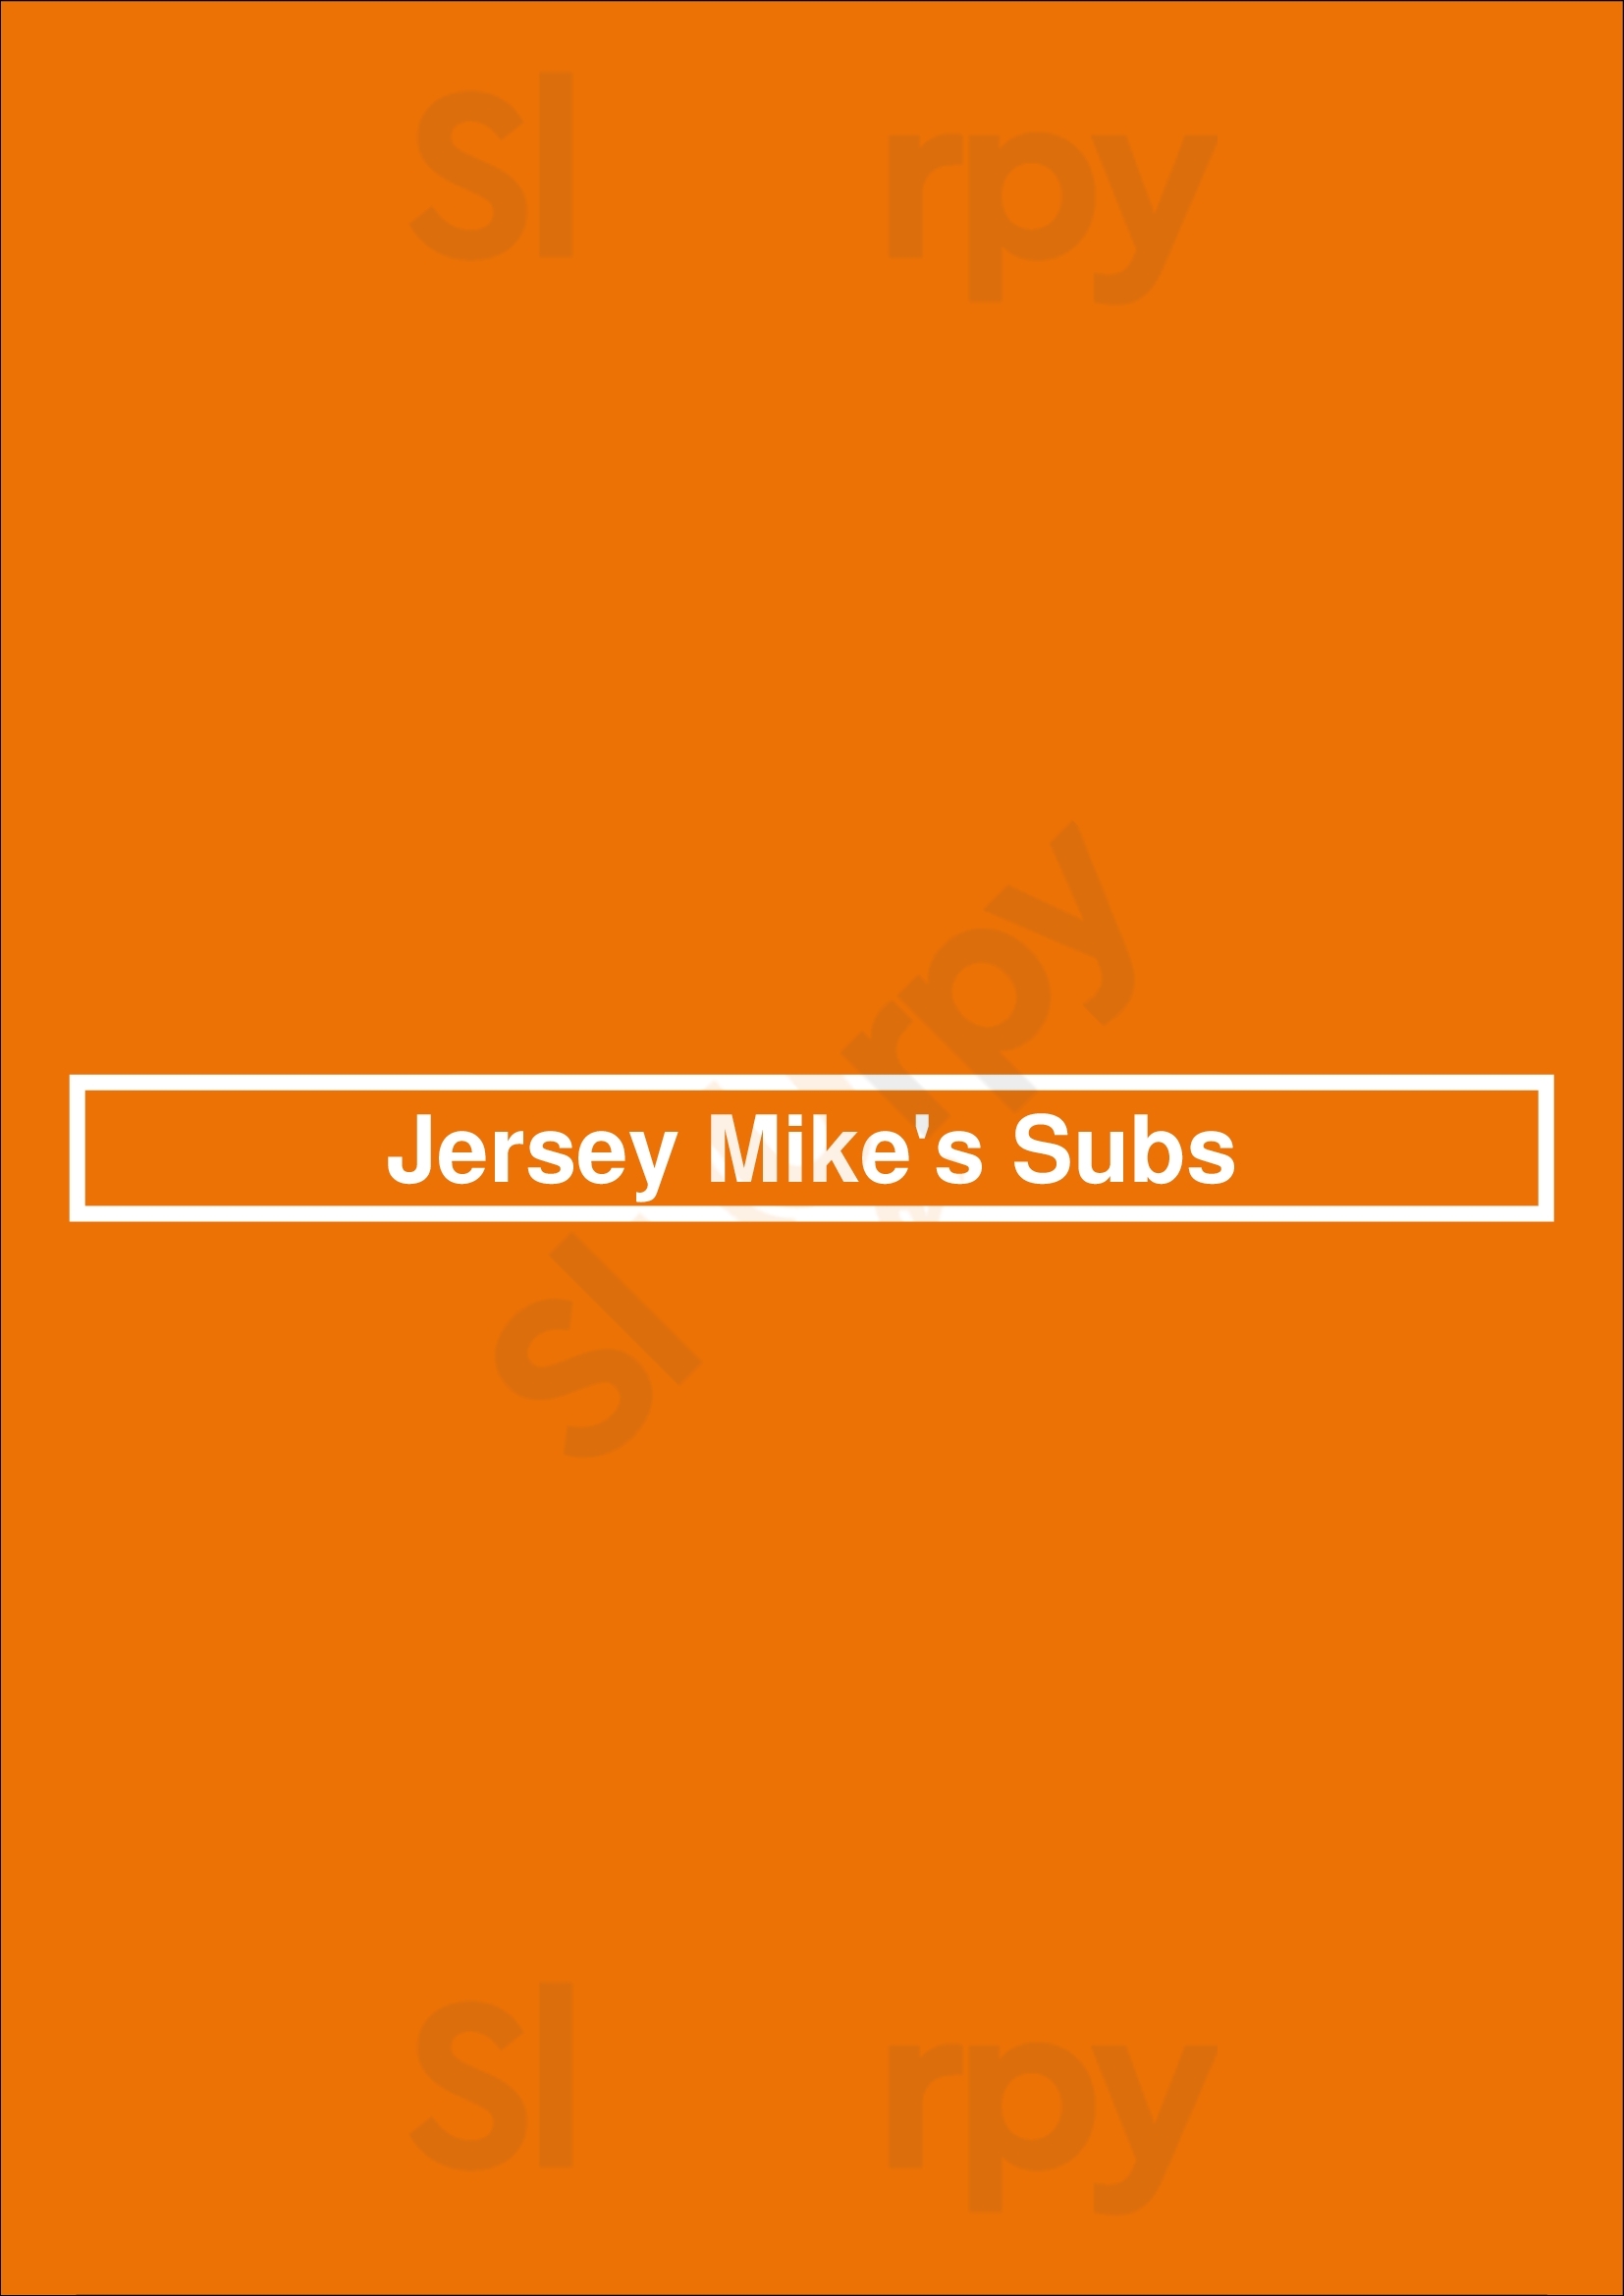 Jersey Mike's Subs Las Vegas Menu - 1